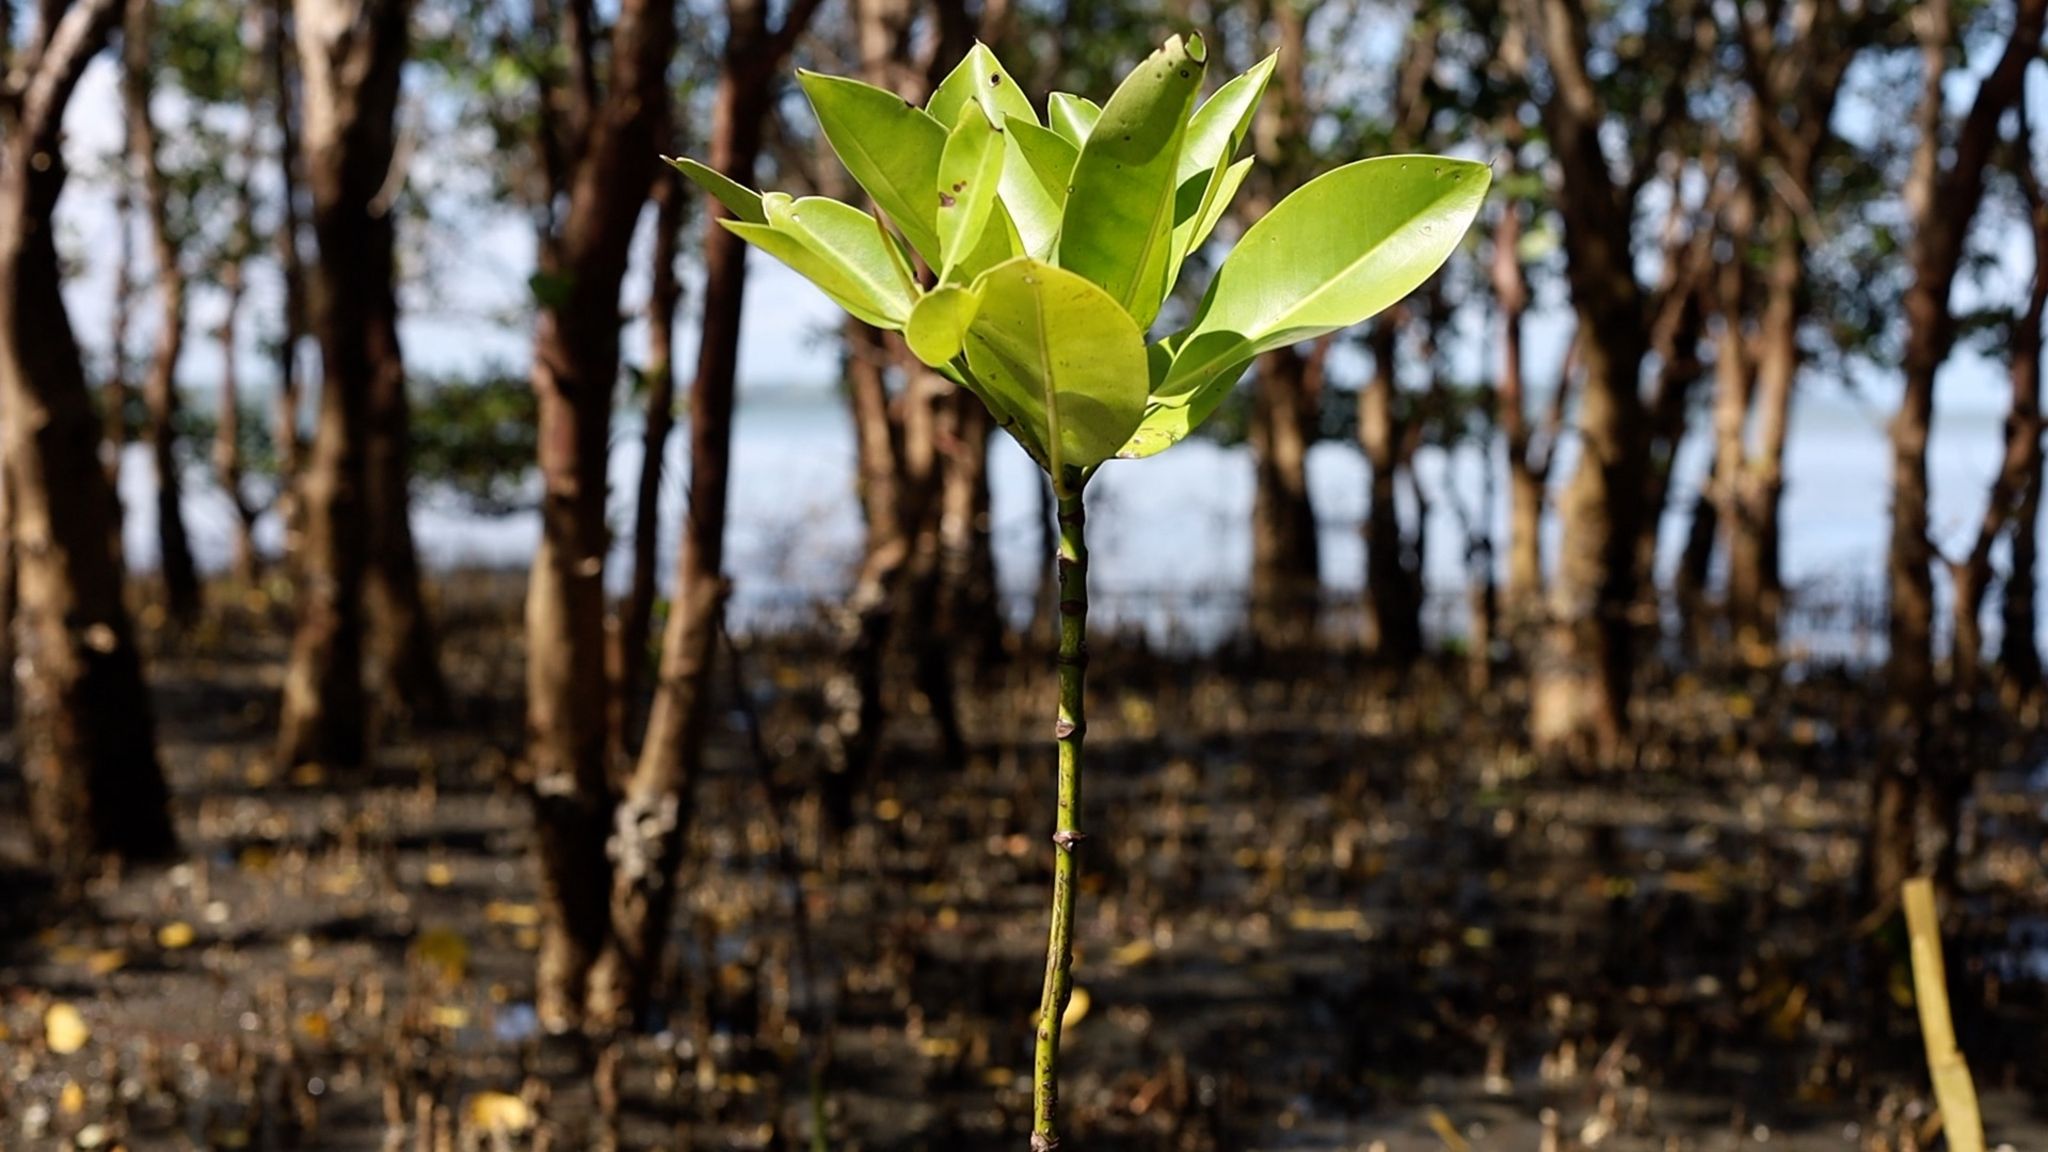 A single mangrove plant